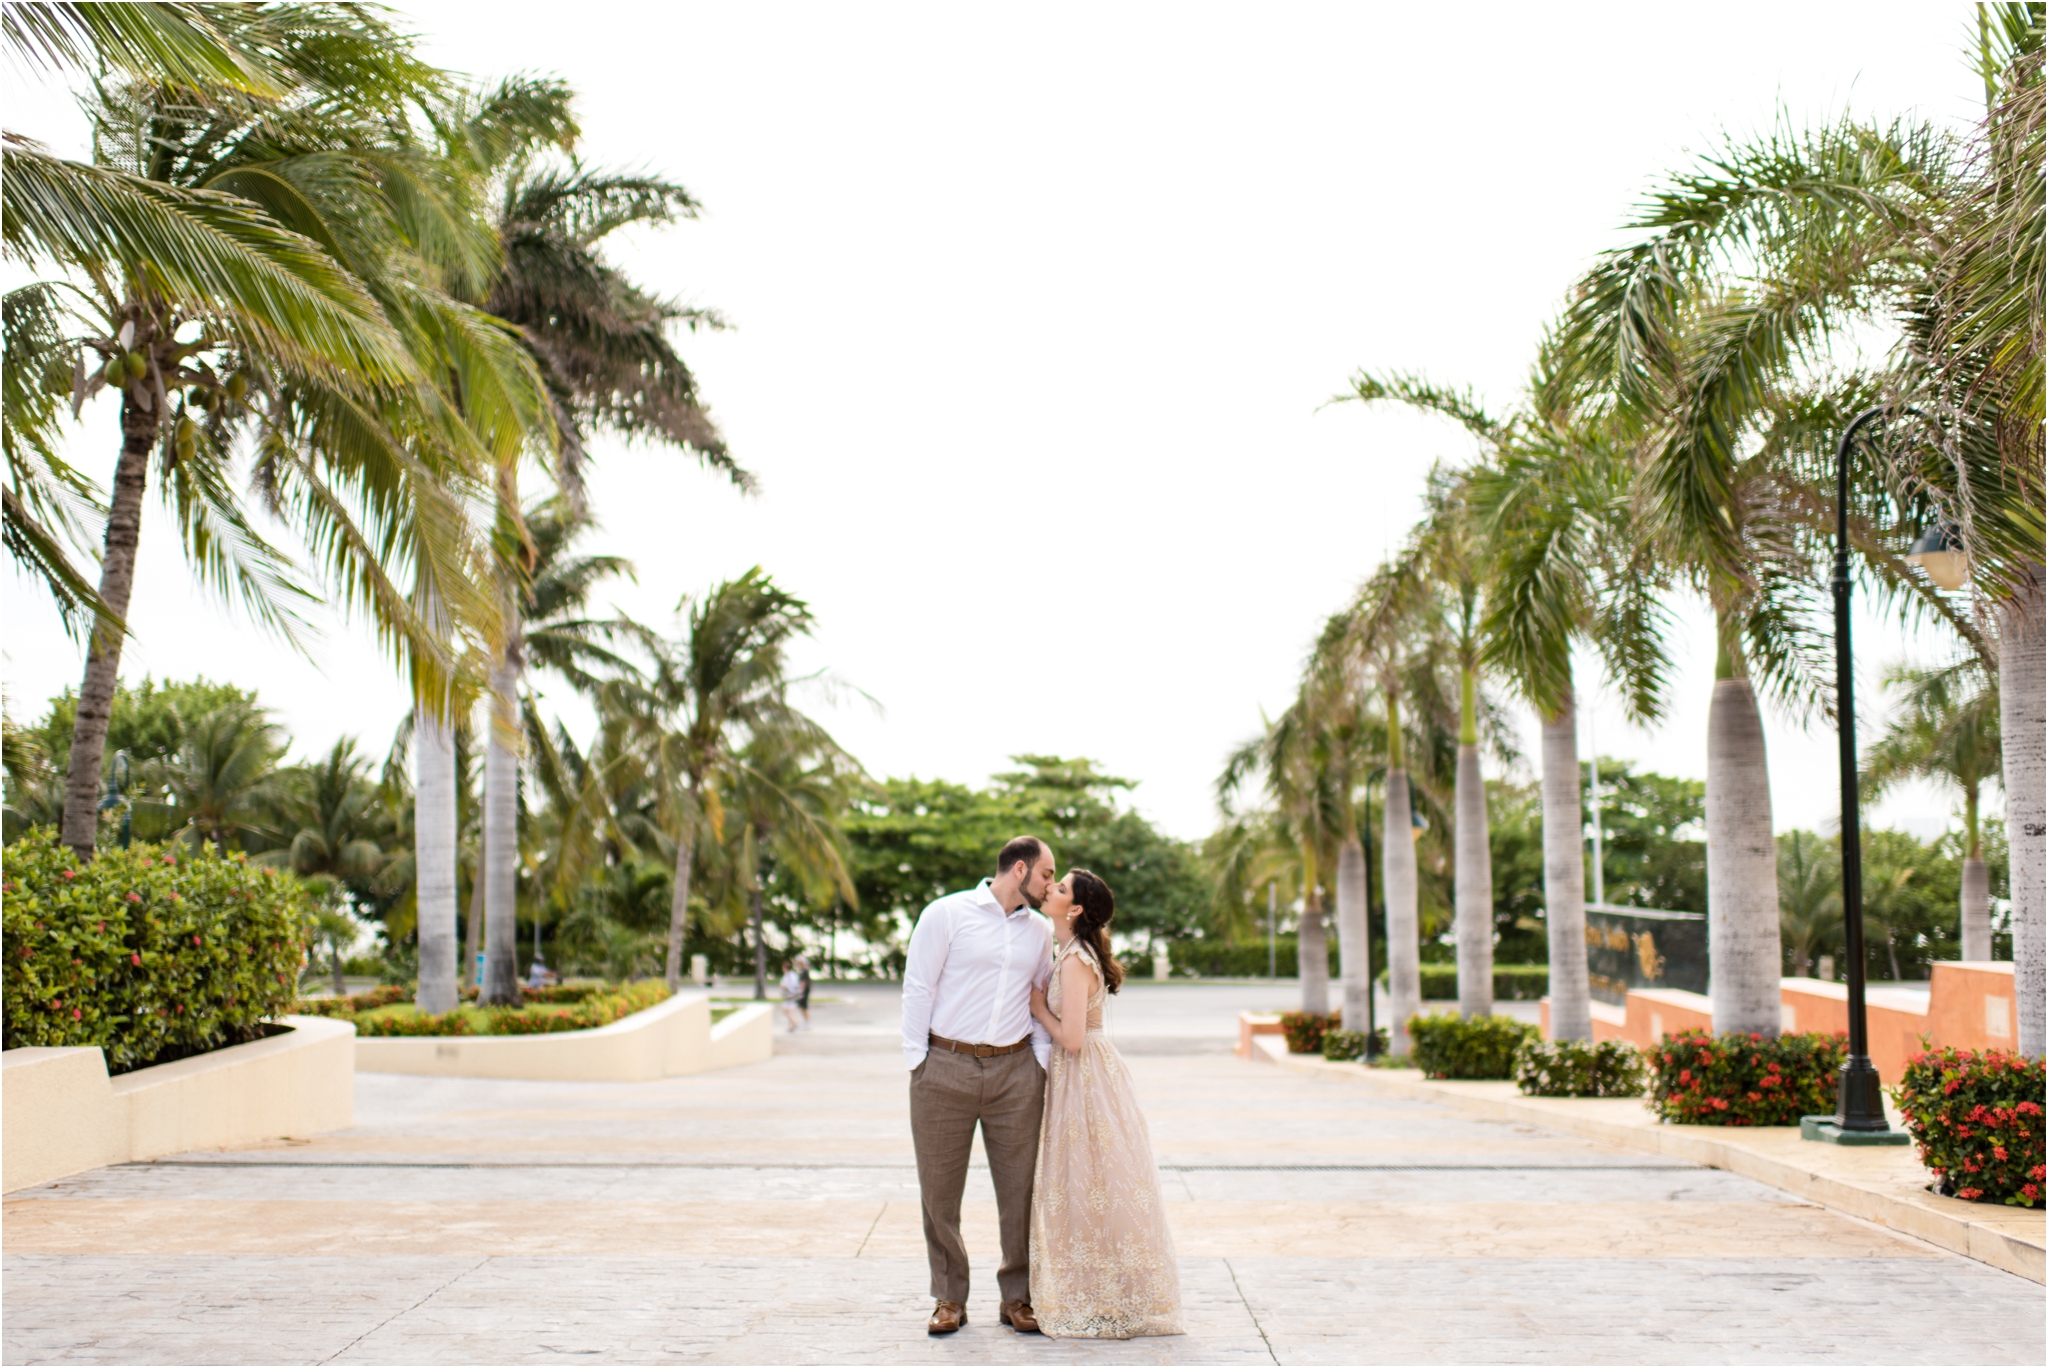 Cancun, Mexico Destination Engagement Photographer | Athena & Vugar